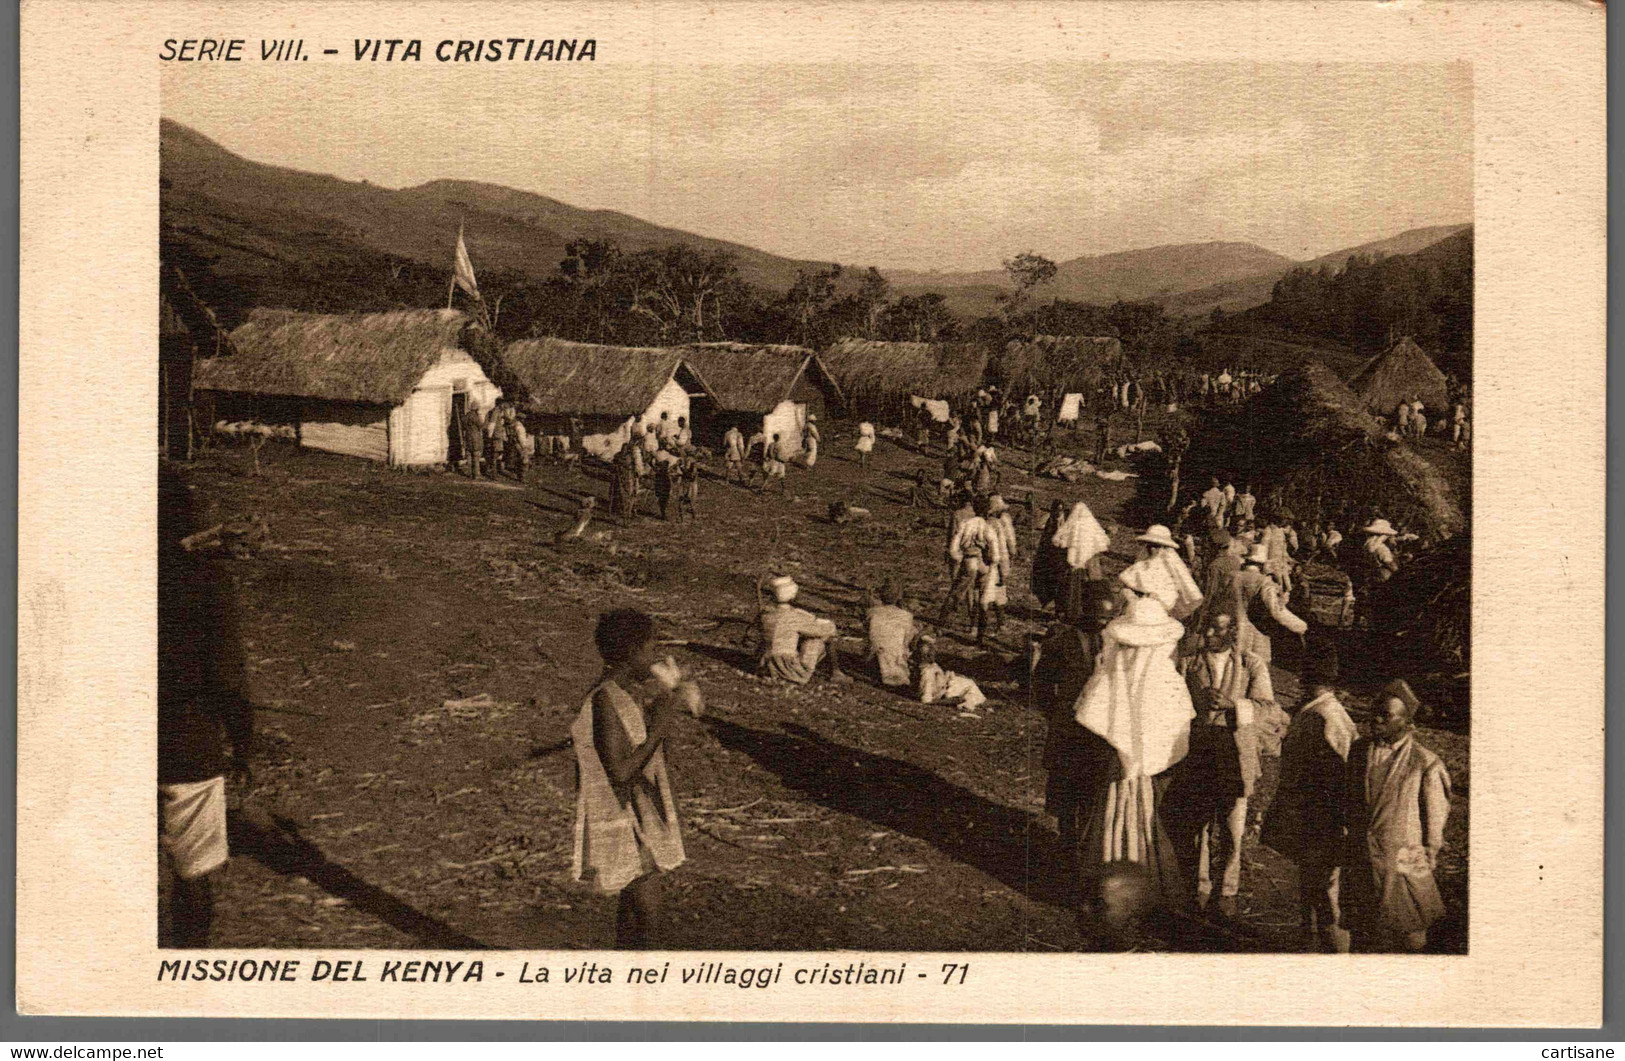 VITA CRISTIANA (Vie Chrétienne) - Vie D'un Village Chrétien - Kenya